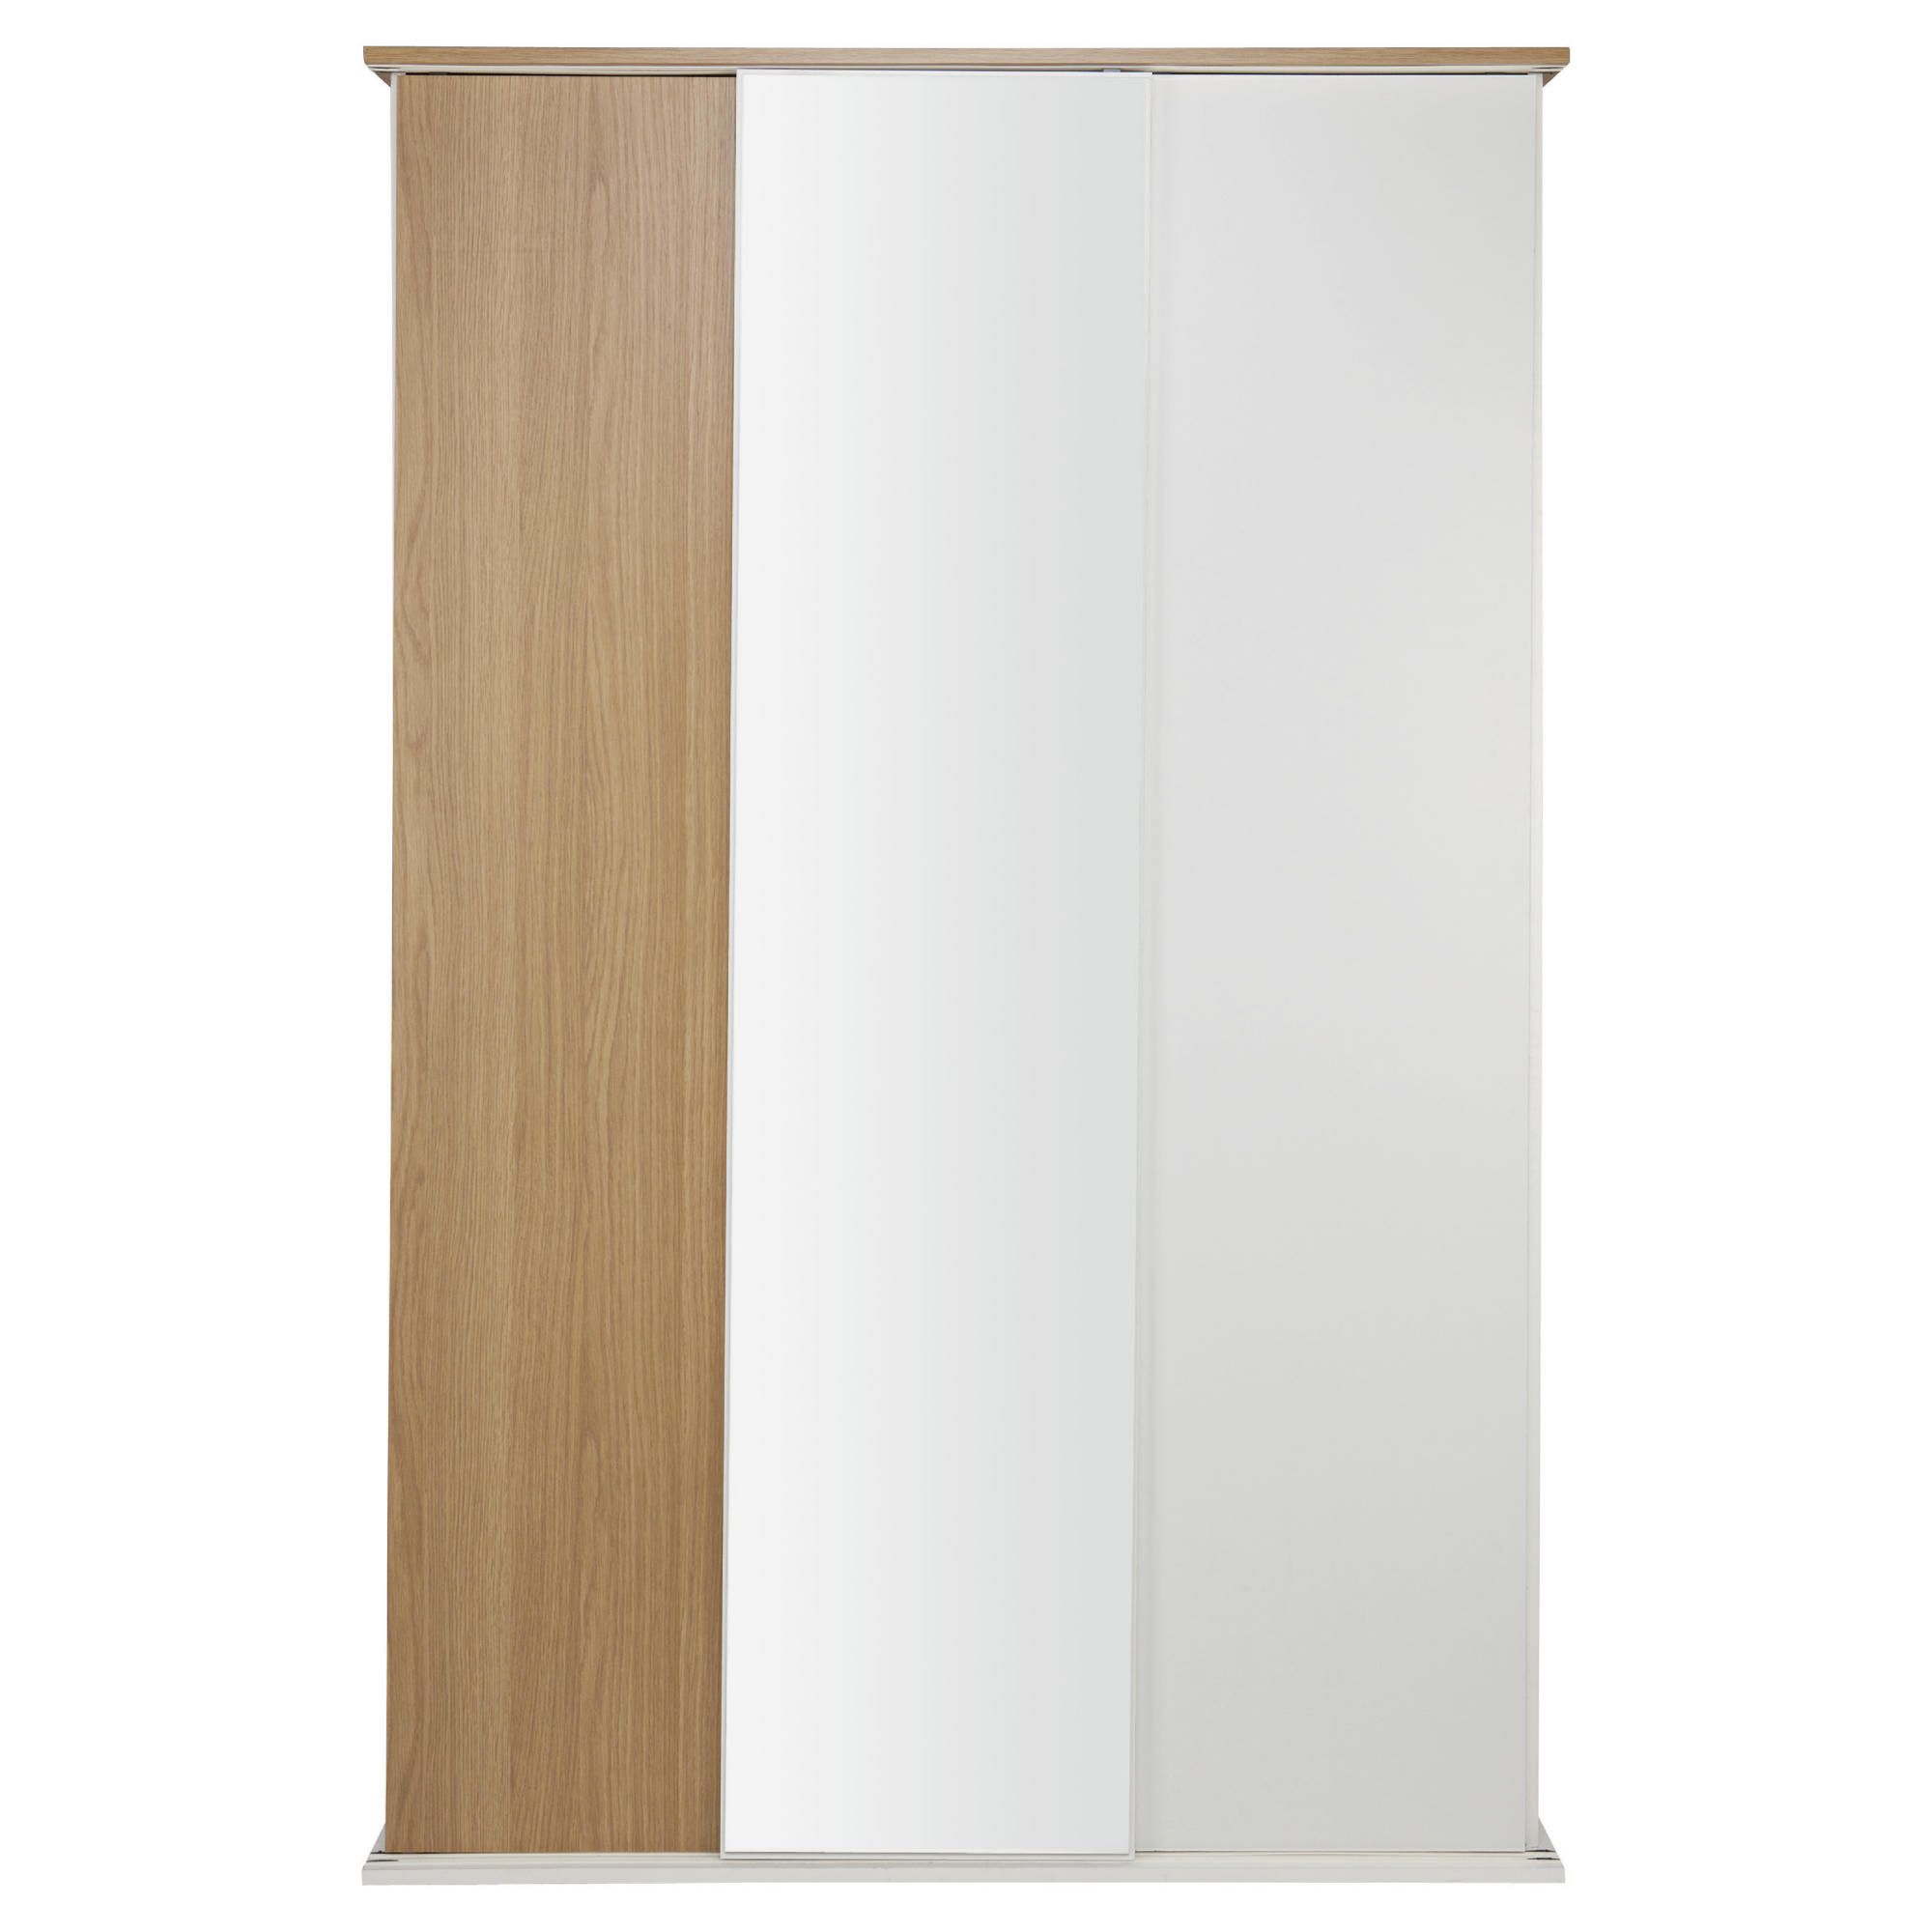 Palma 3 Door Mirror Sliding Robe With Internal Shelves Oak And White at Tesco Direct